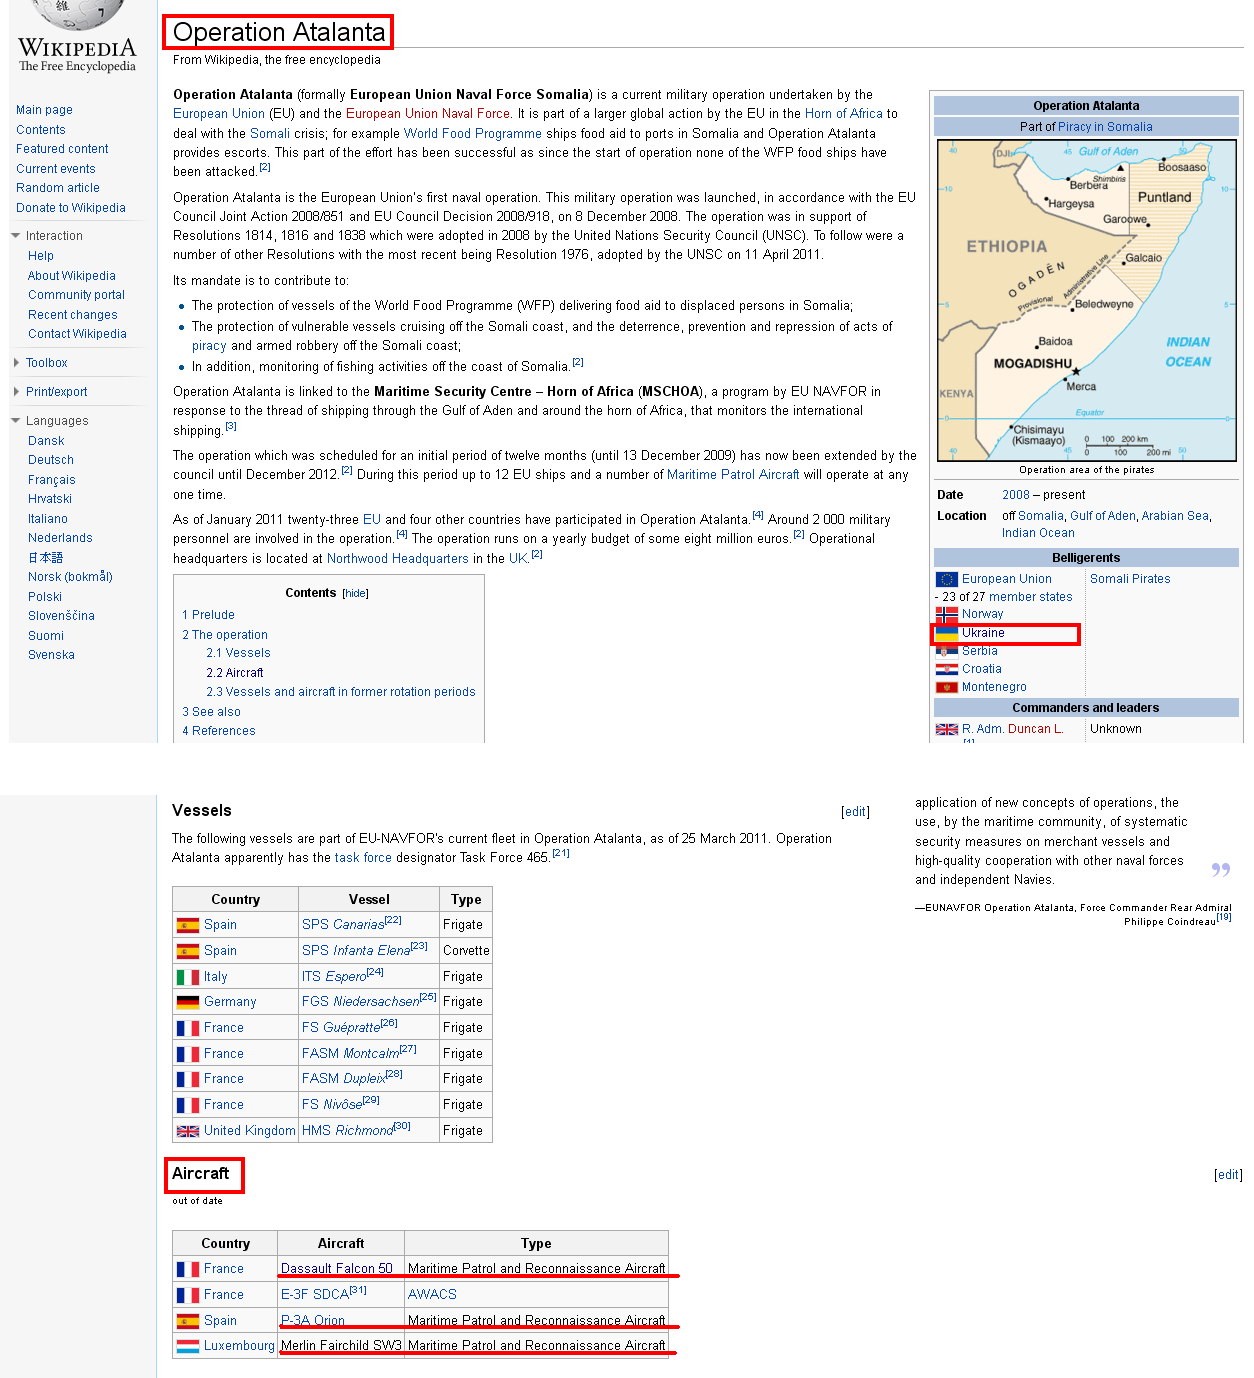 http://en.wikipedia.org/wiki/Operation_Atalanta